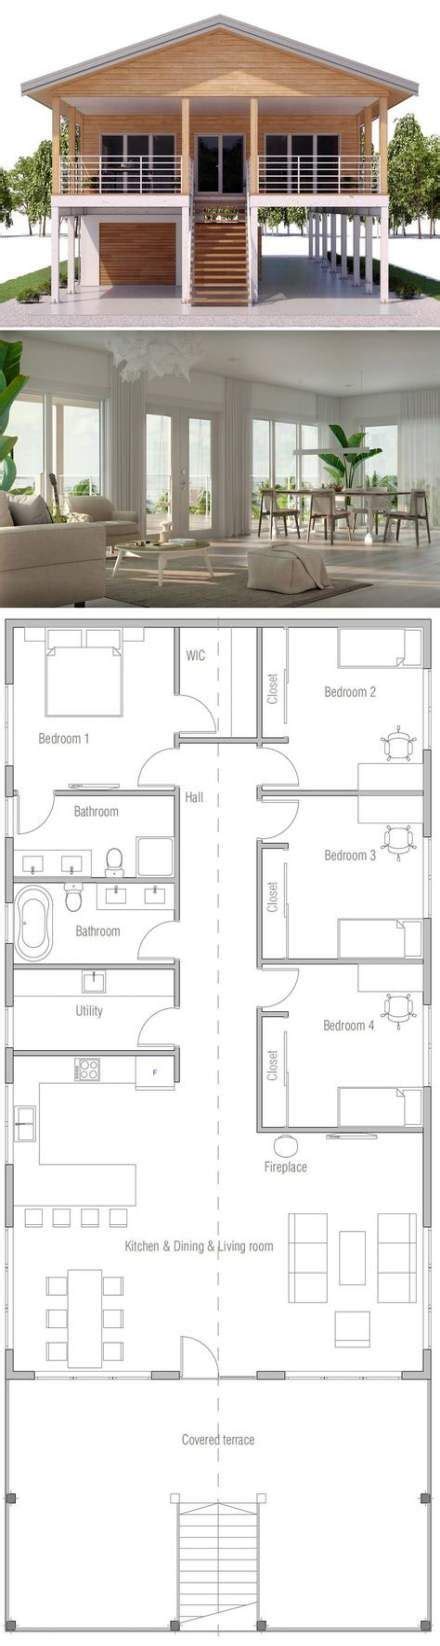 ideas  home design ideas floor plans bedrooms minecraft modern house blueprints